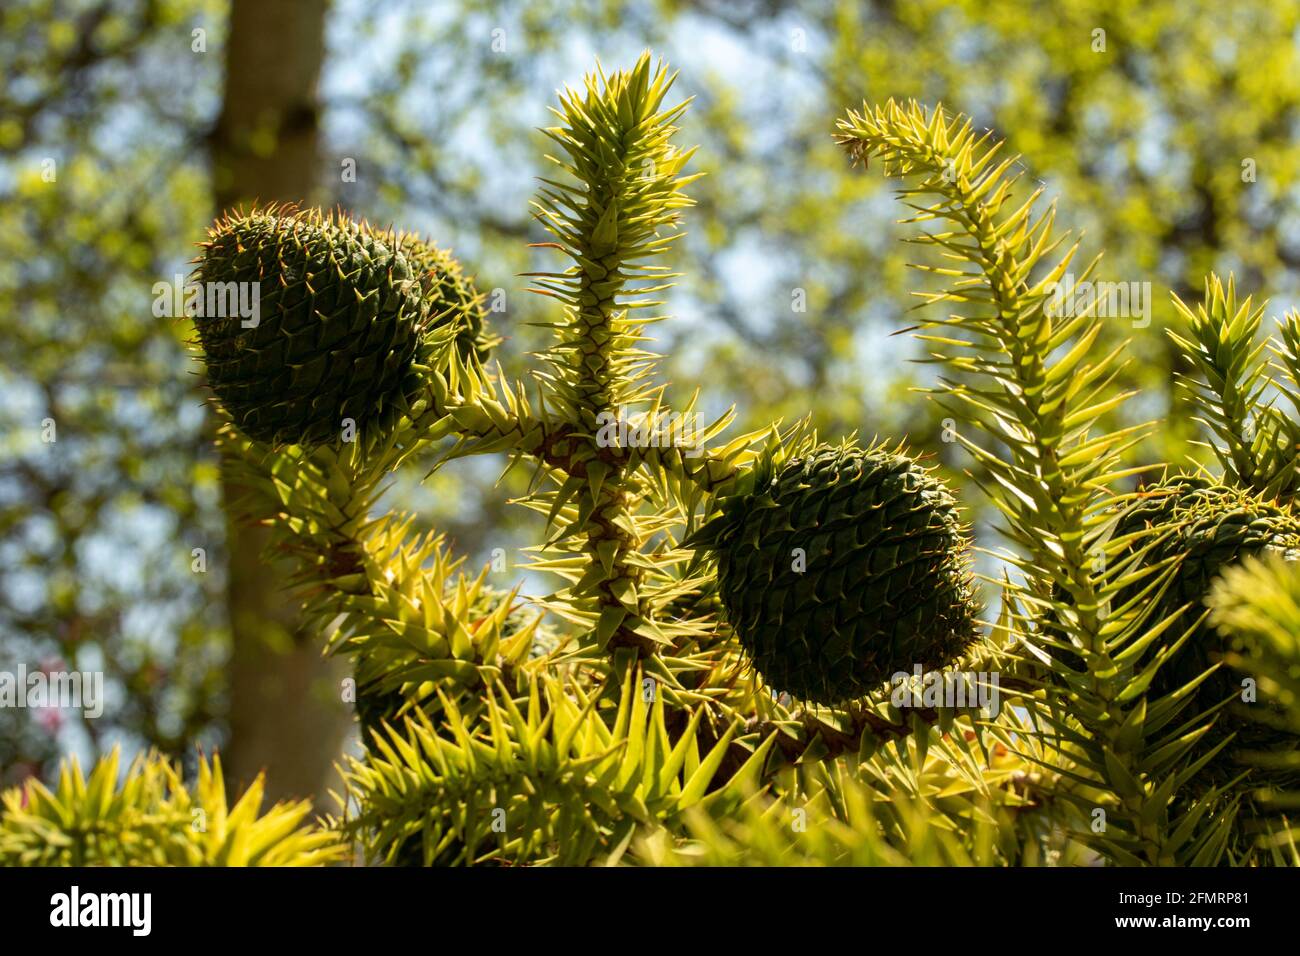 Araucaria angustifolia, Paraná pine, in bright spring sunshine Stock Photo